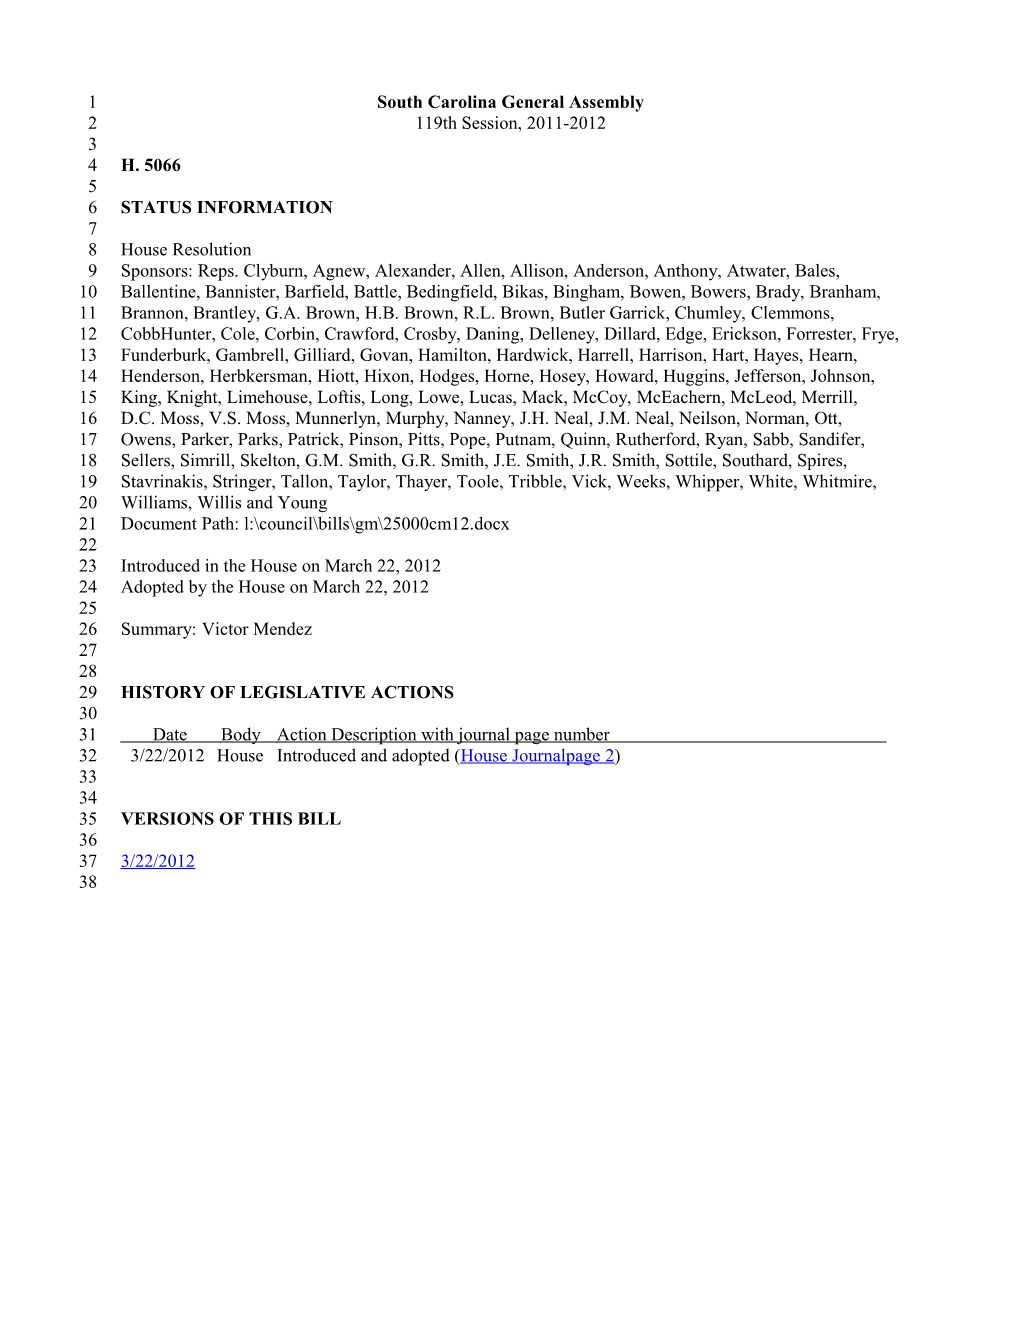 2011-2012 Bill 5066: Victor Mendez - South Carolina Legislature Online